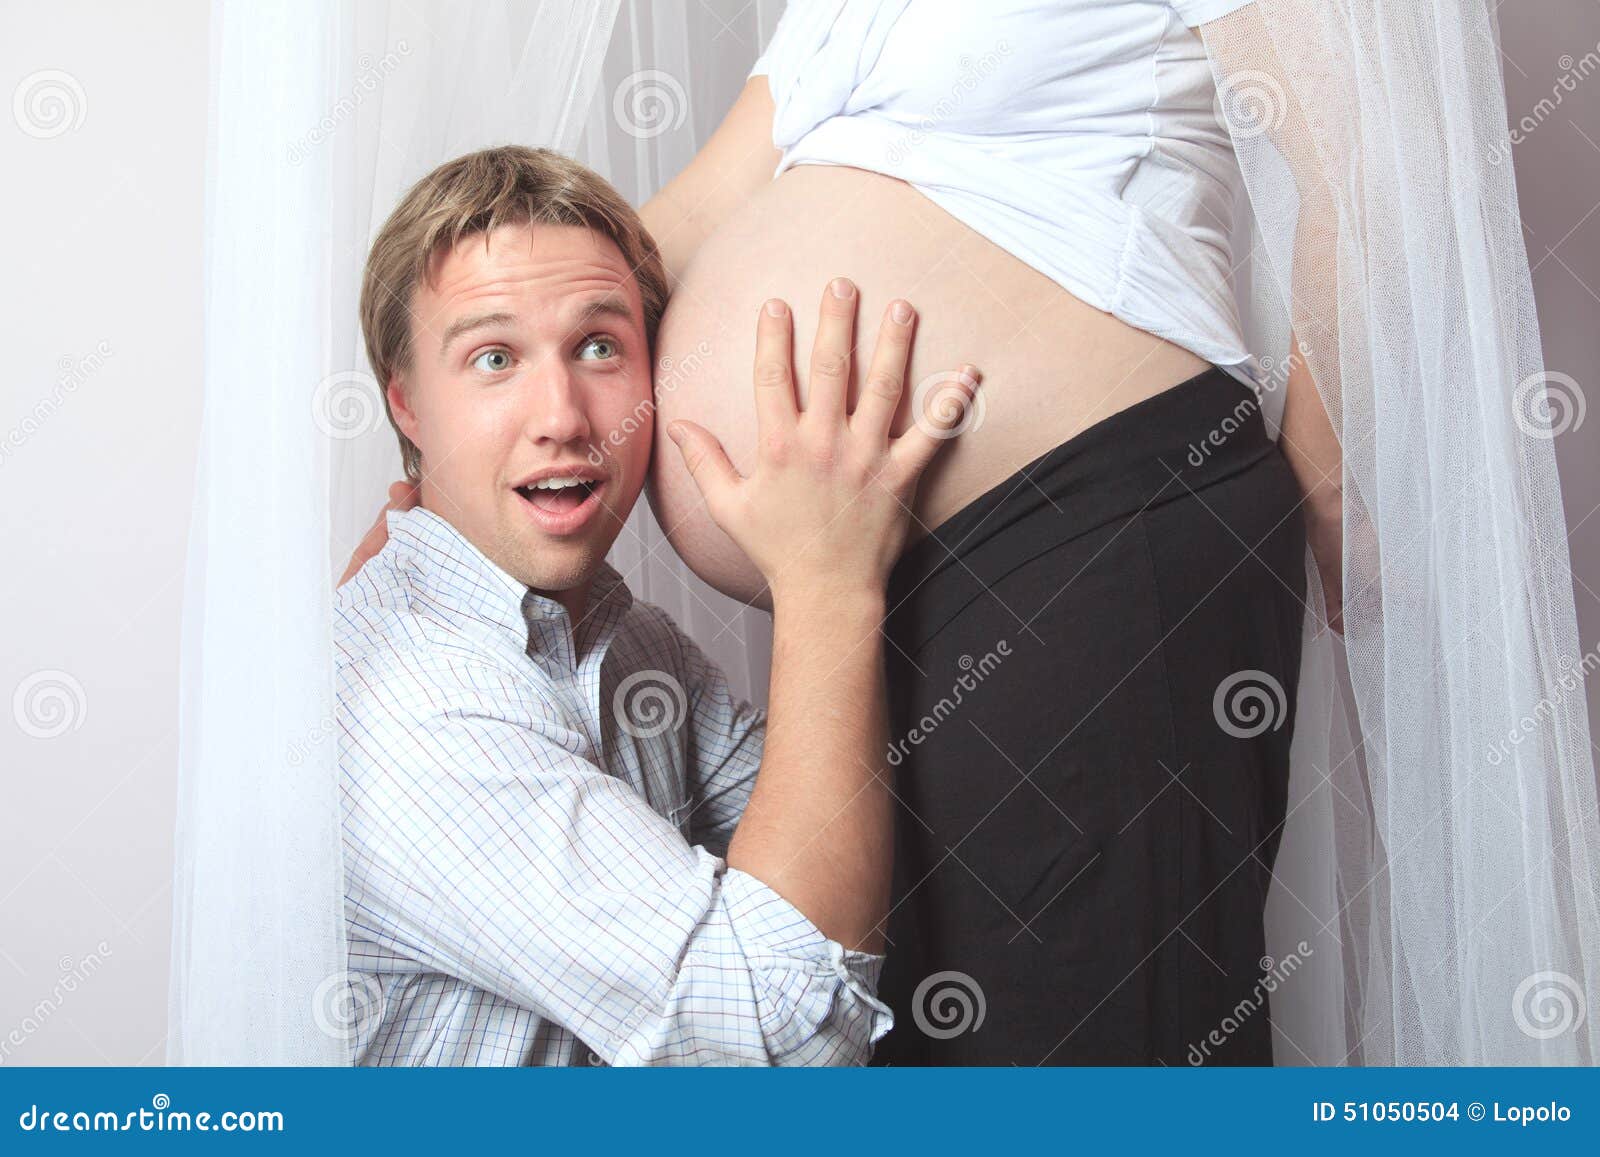 and Pregnant boyfriend women their